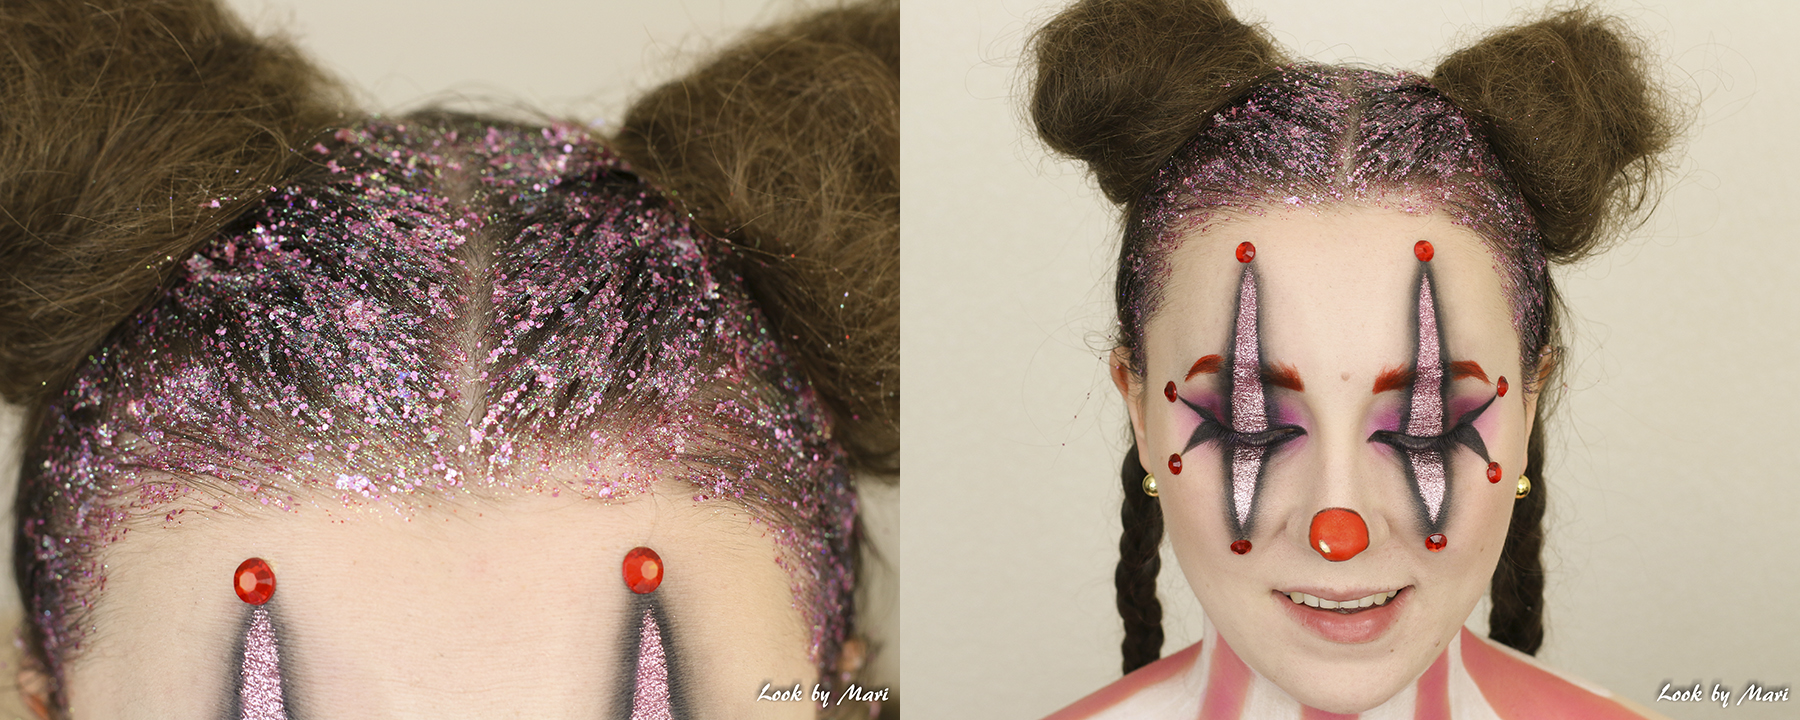 16 clown makeup glittery hair inspo ideas how to tutorial